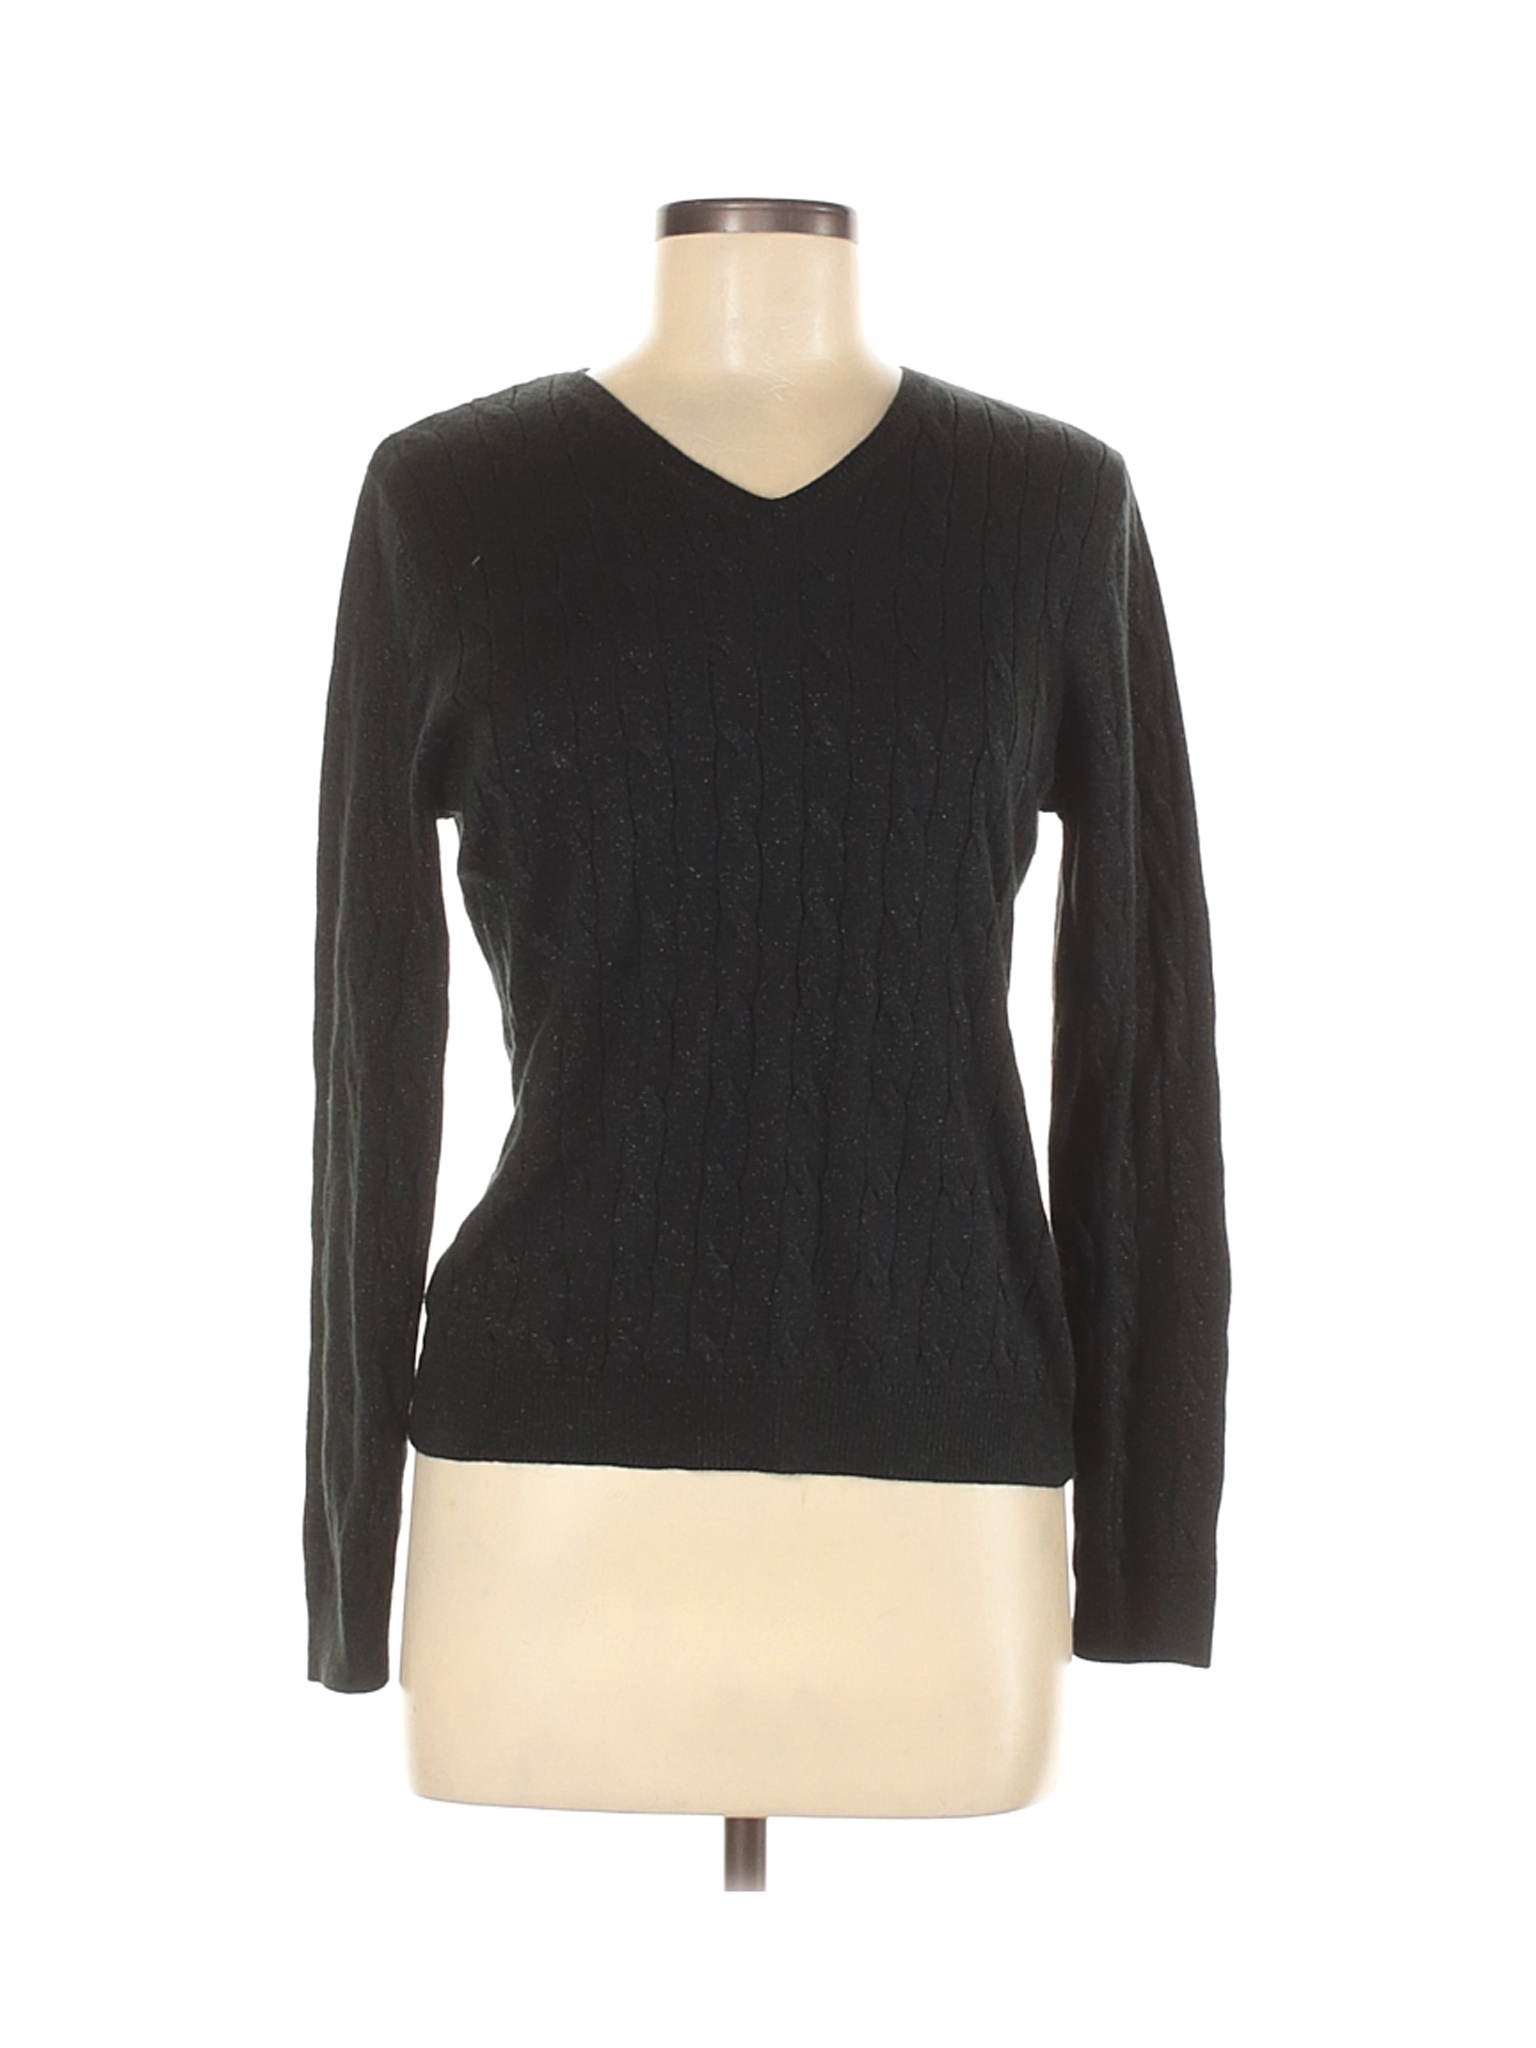 Croft & Barrow Women Black Pullover Sweater M | eBay